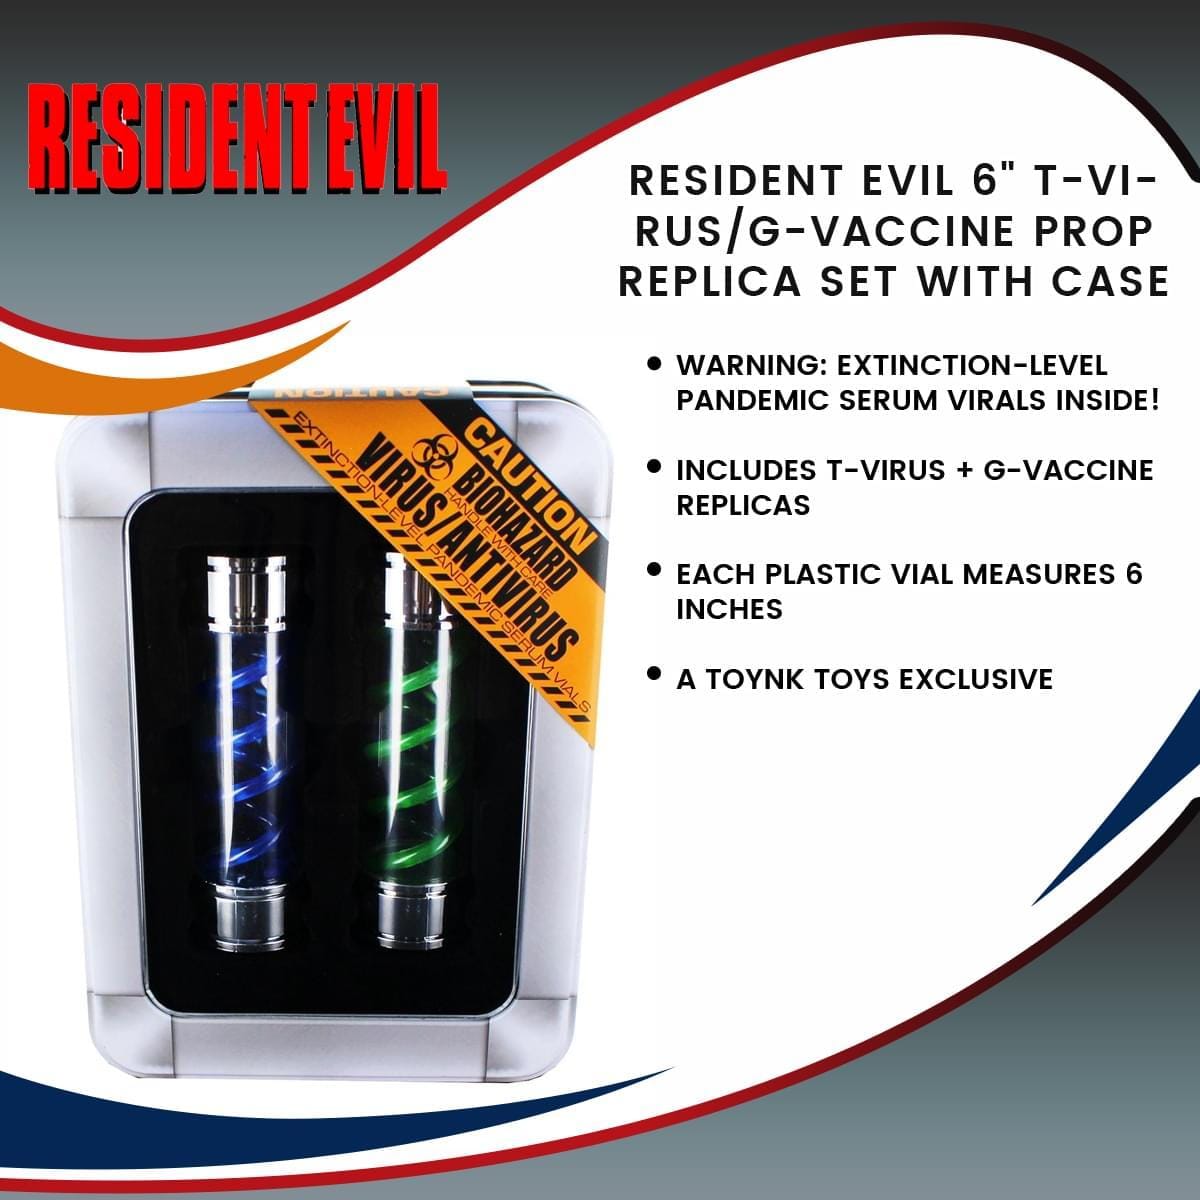 Resident Evil 6" T-Virus/G-Vaccine Prop Replica Set with Case